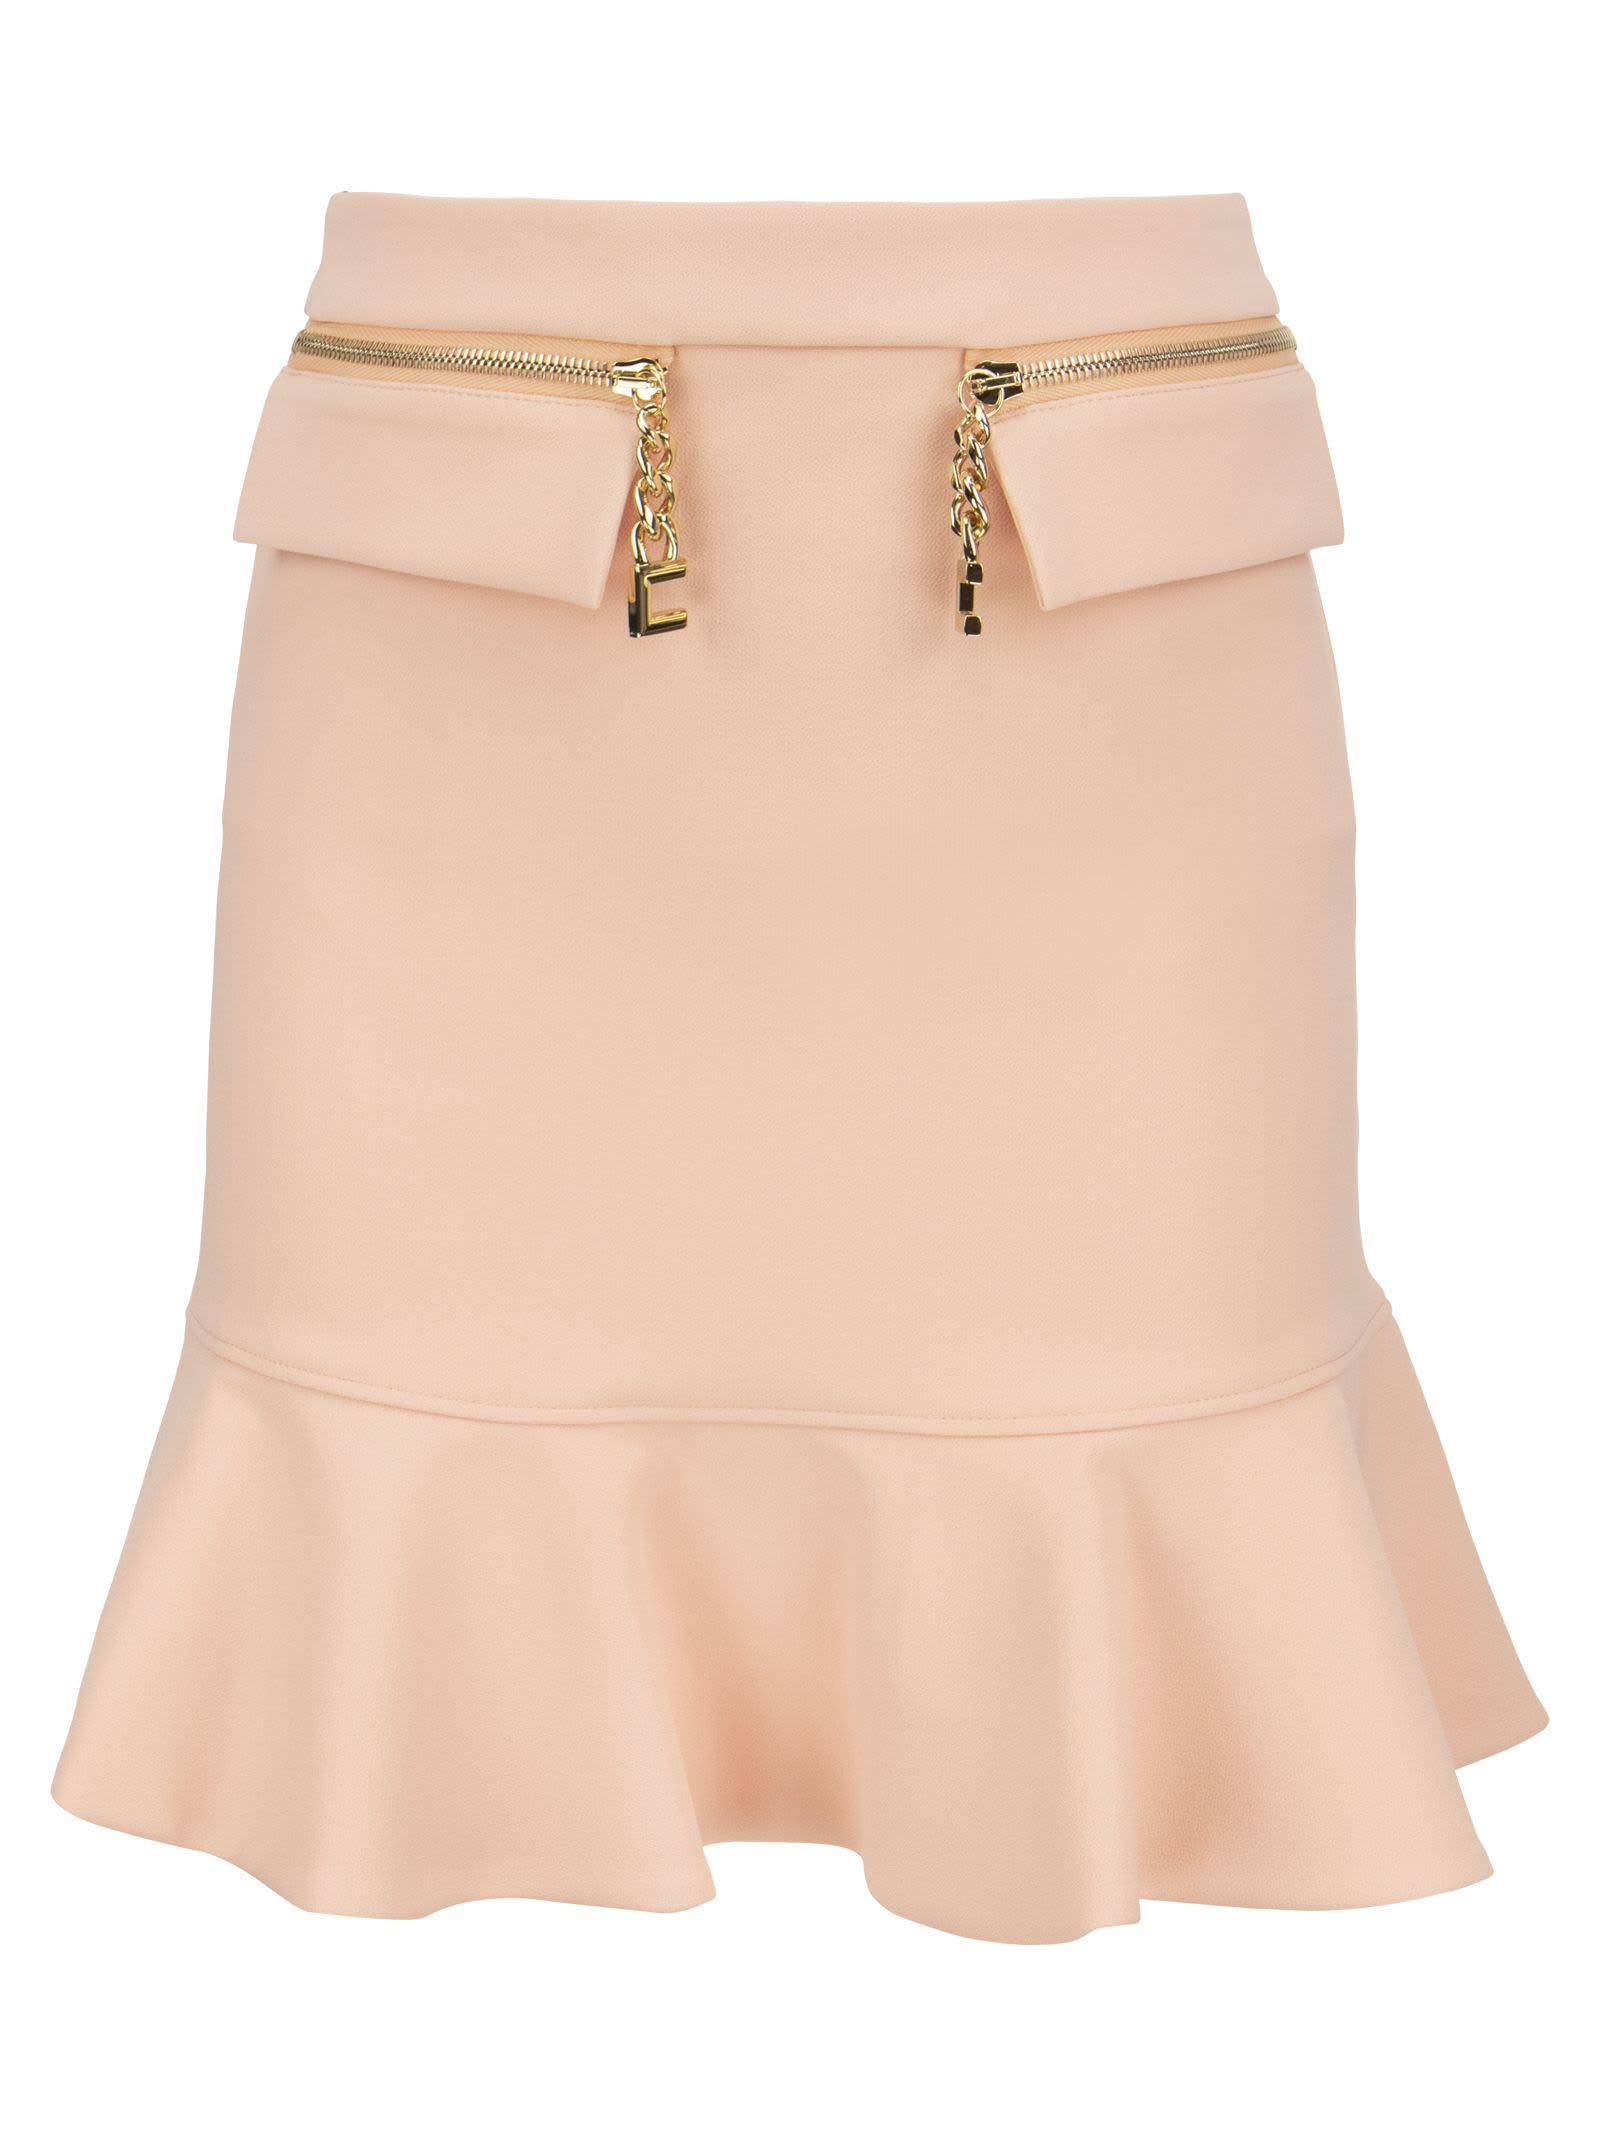 Elisabetta Franchi Miniskirt With Flounce And Gold Charm